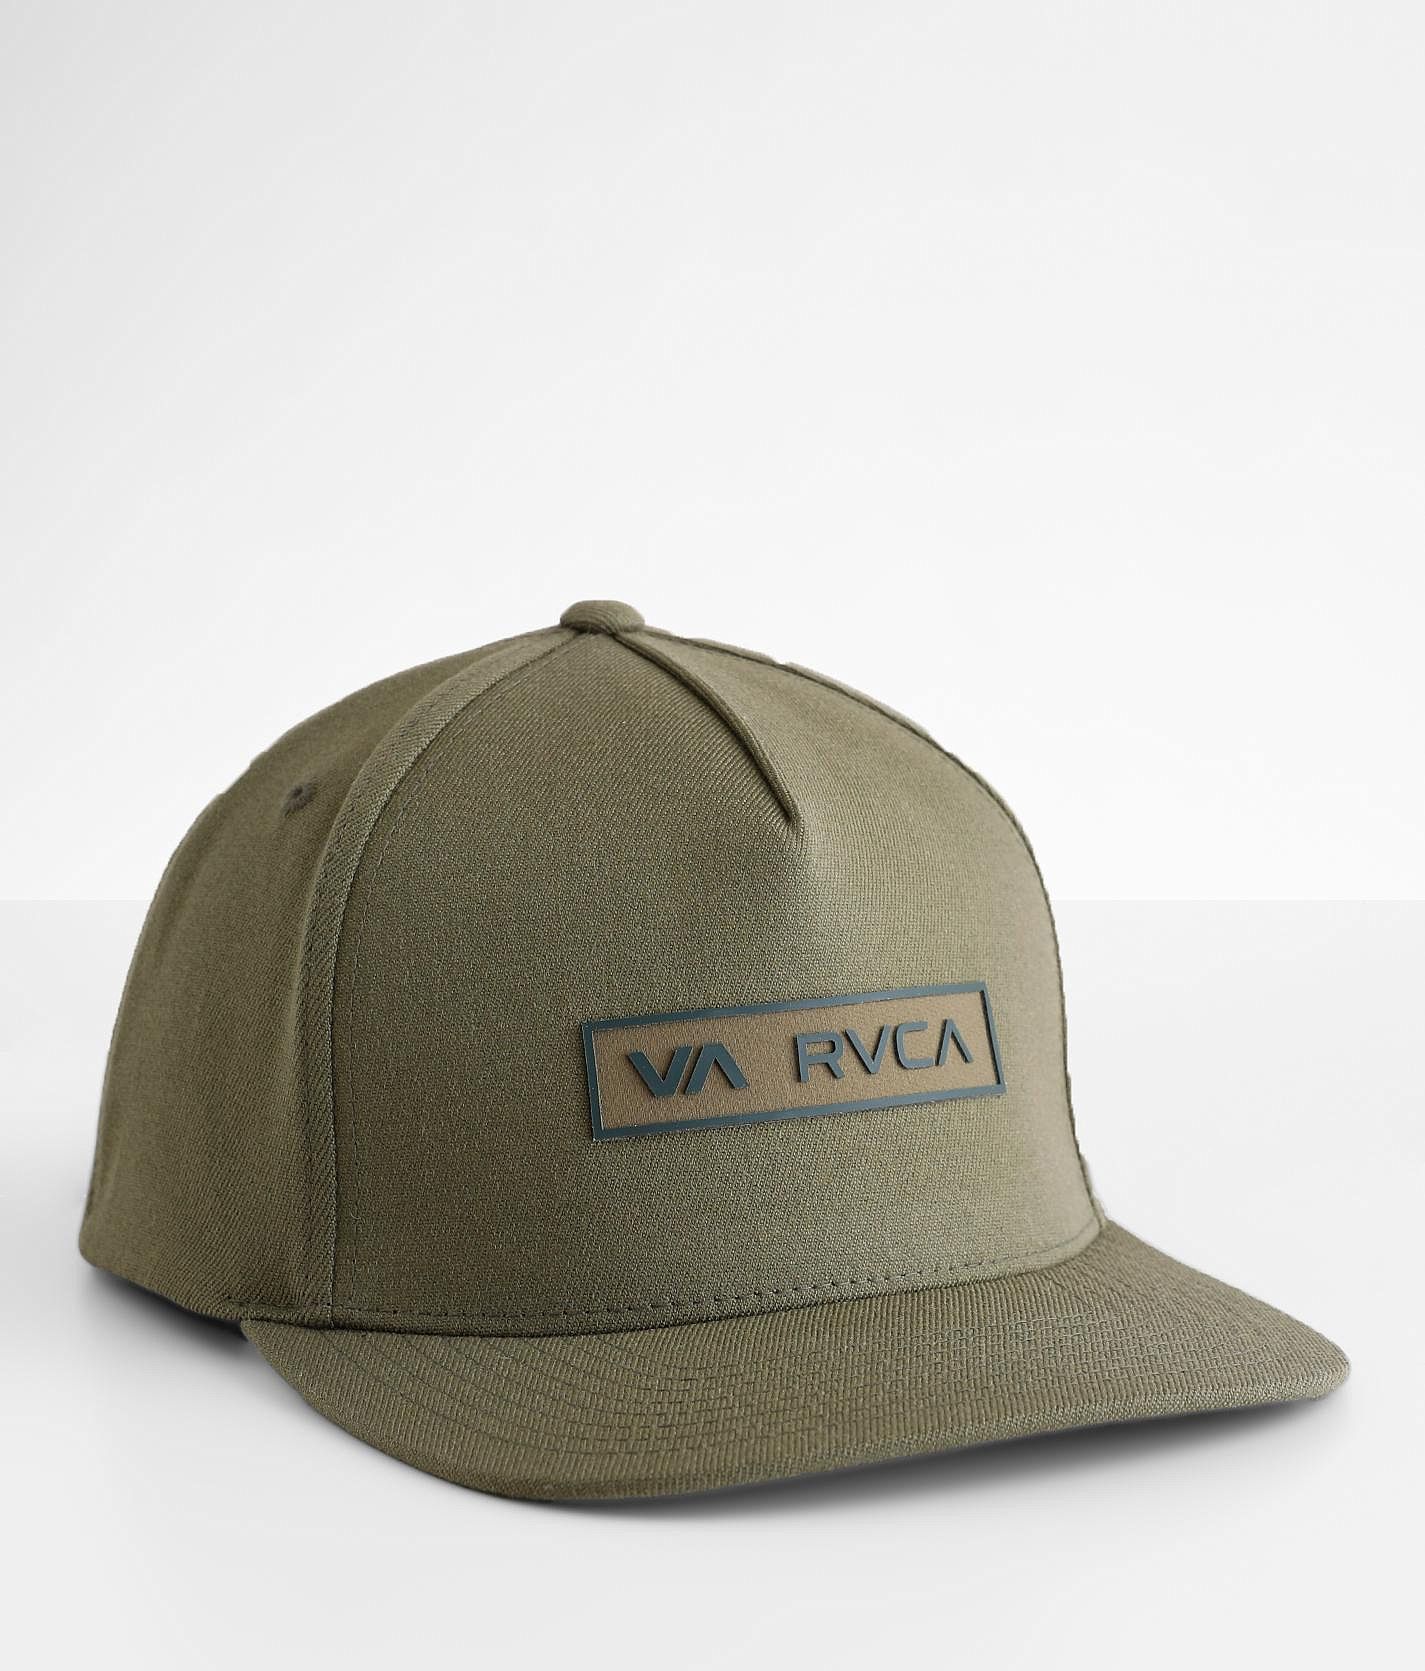 RVCA Men's Stadium Snapback Hat, Olive